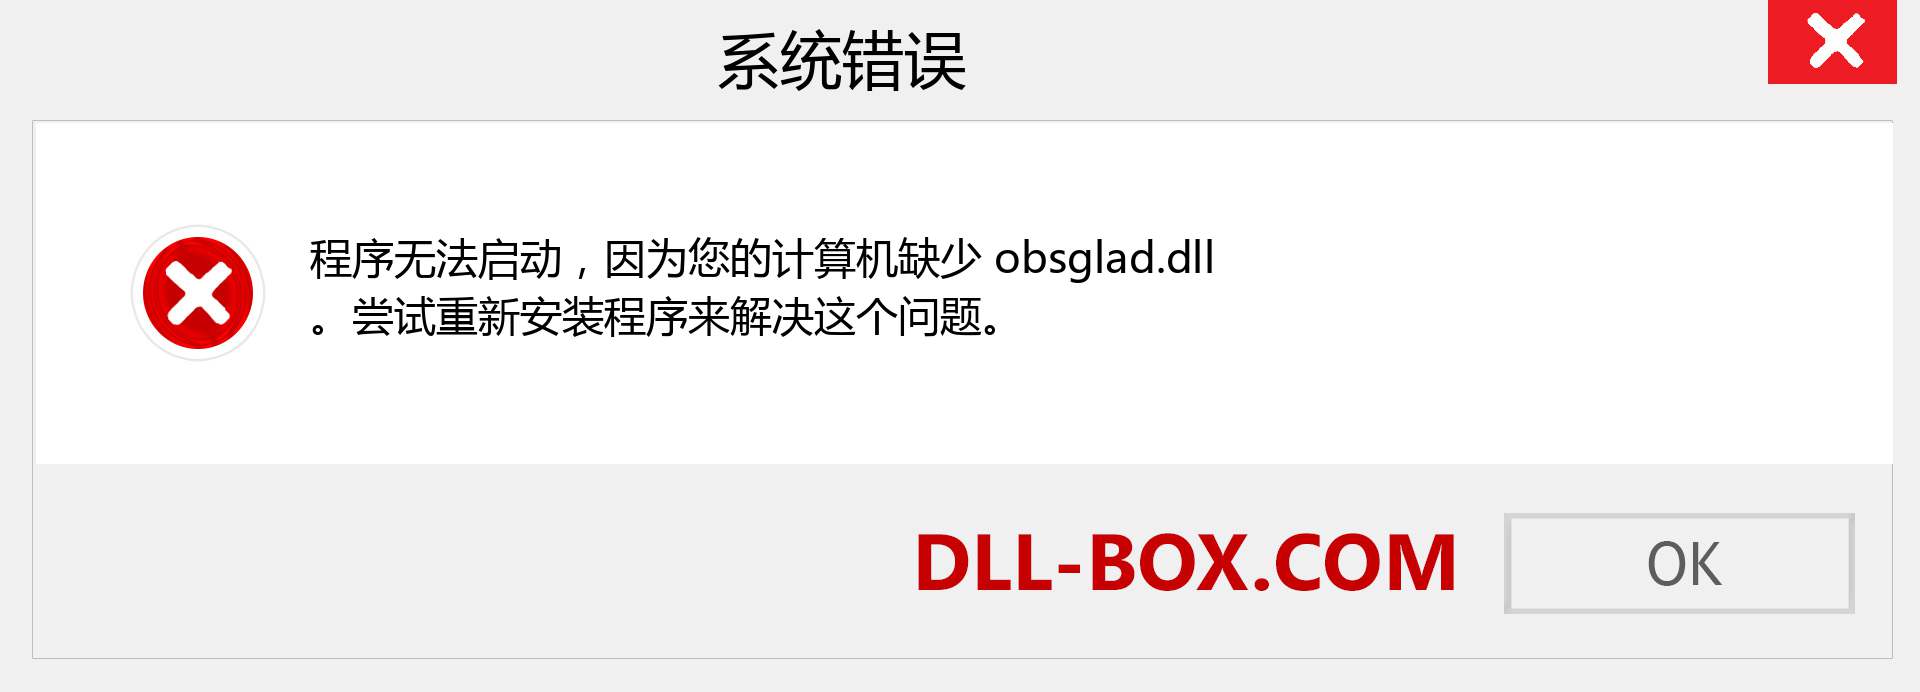 obsglad.dll 文件丢失？。 适用于 Windows 7、8、10 的下载 - 修复 Windows、照片、图像上的 obsglad dll 丢失错误